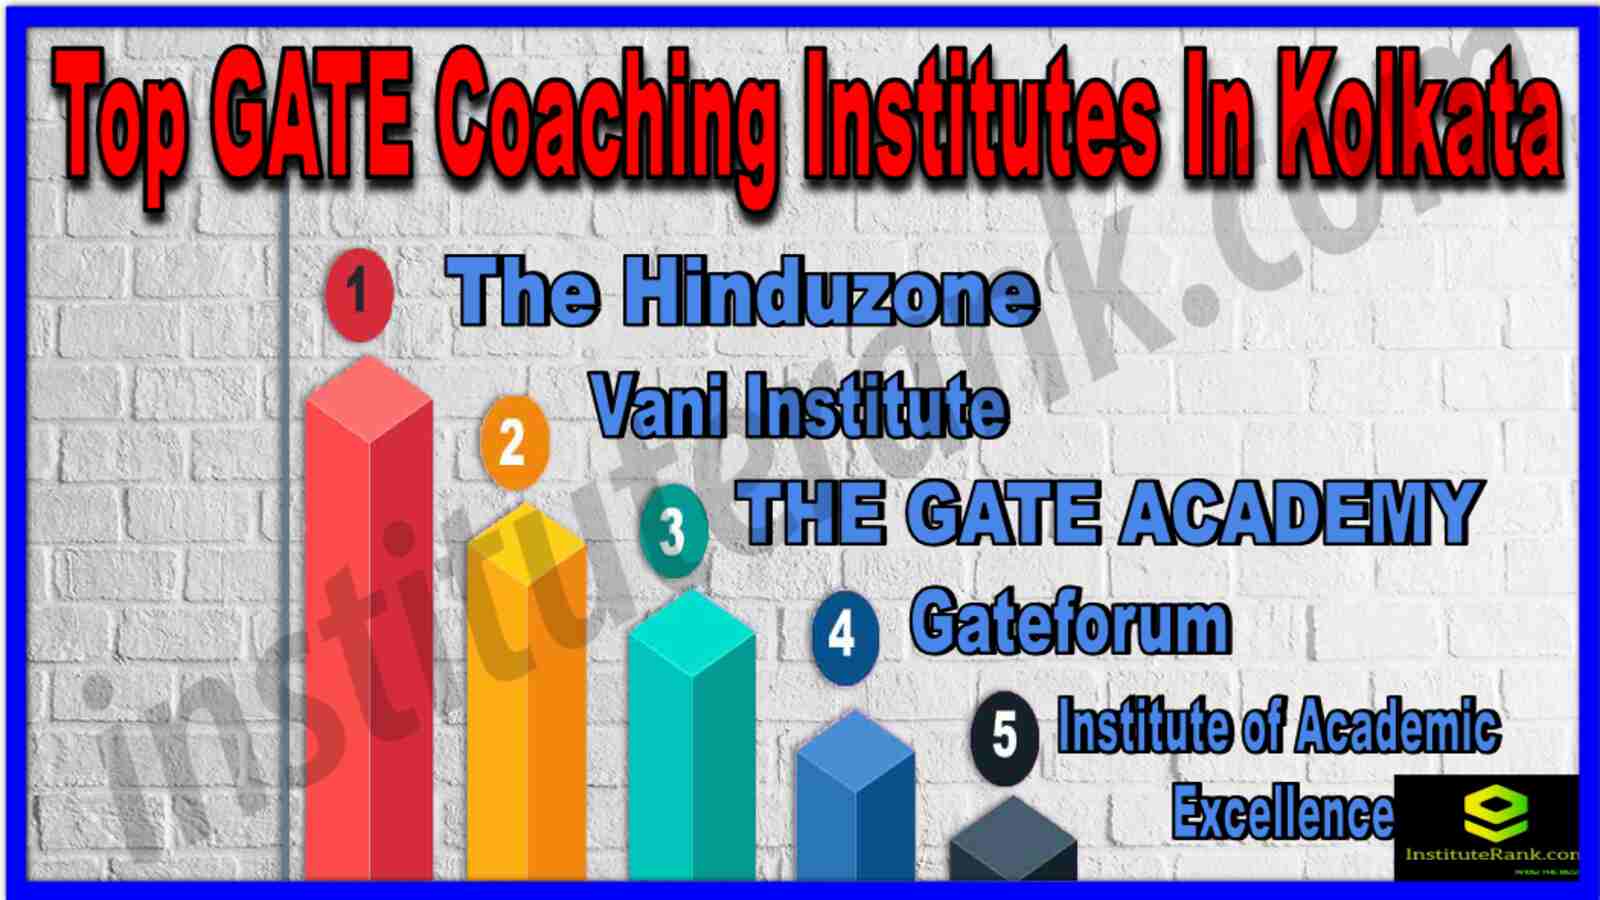 Top GATE Coaching institutes in Kolkata